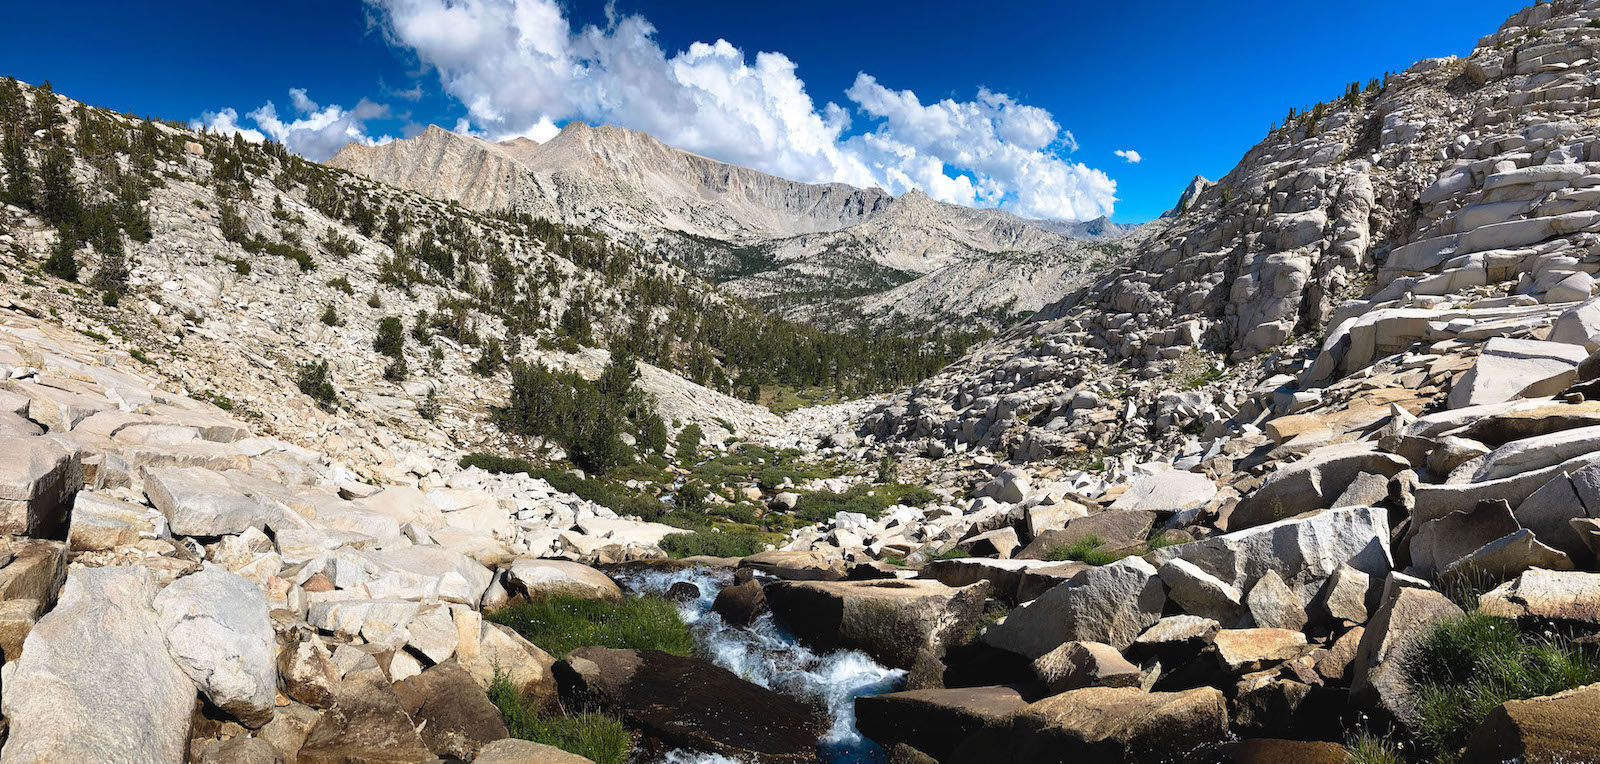 Alpine stream near Chalfant Lakes in the Eastern Sierras